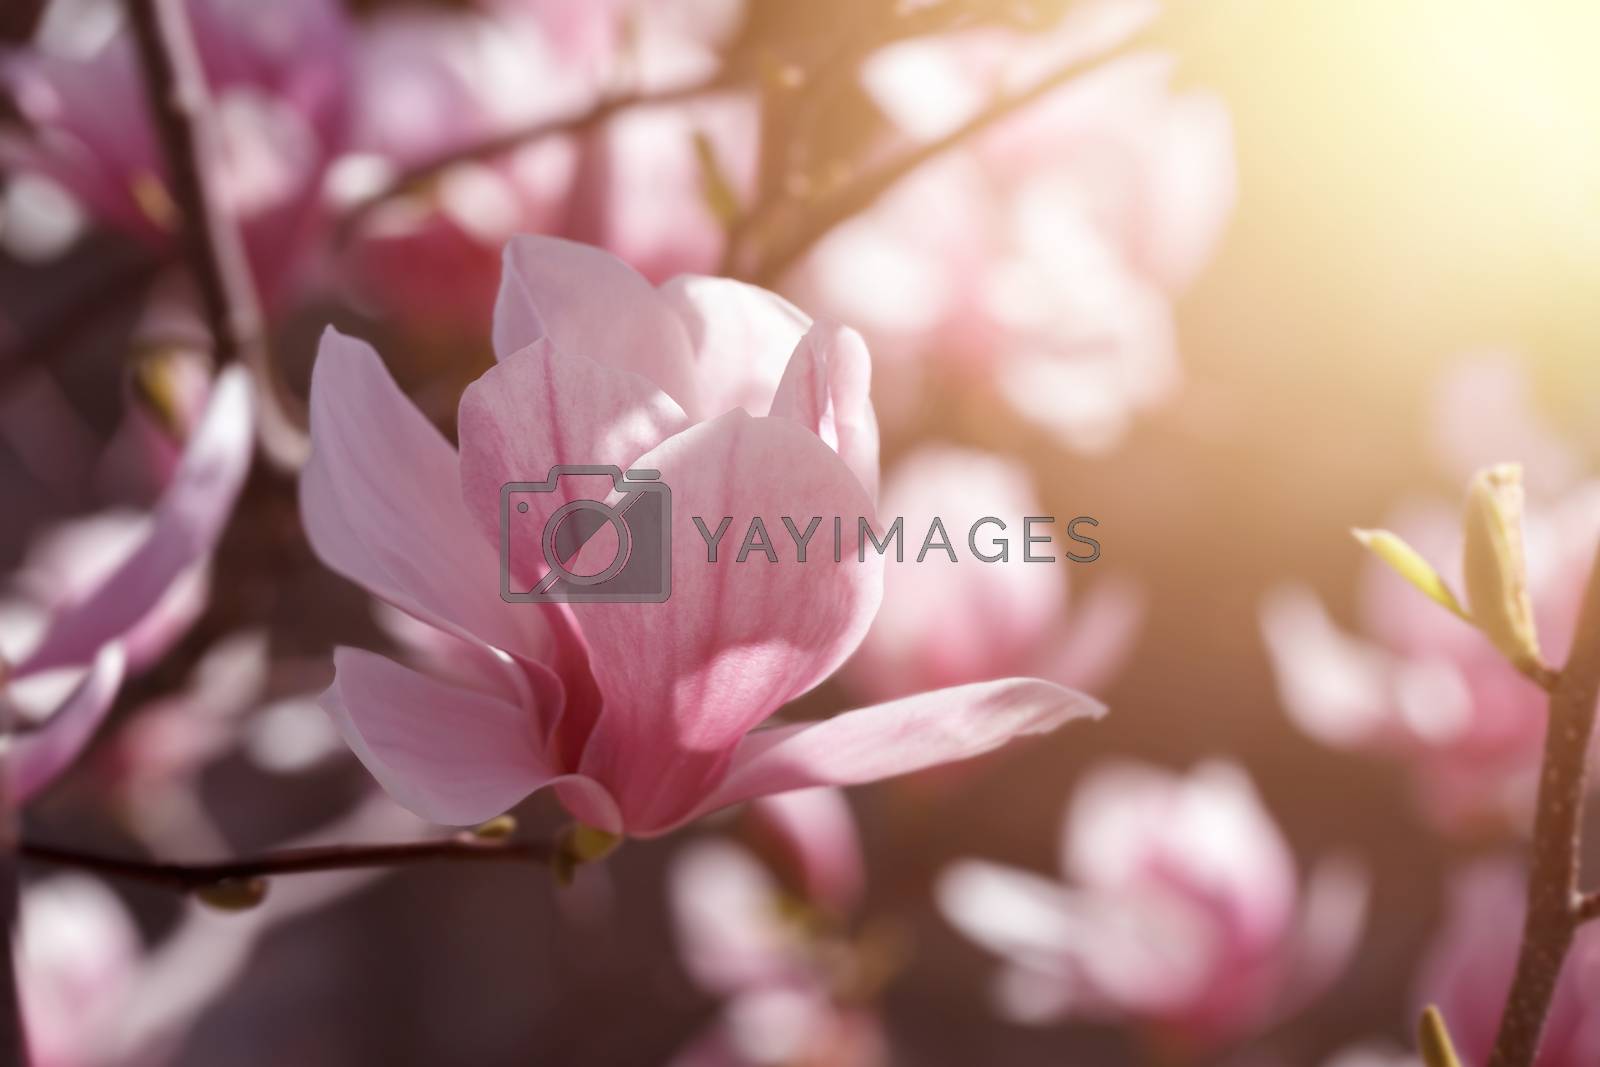 Royalty free image of Blooming pink magnolia by Lana_M